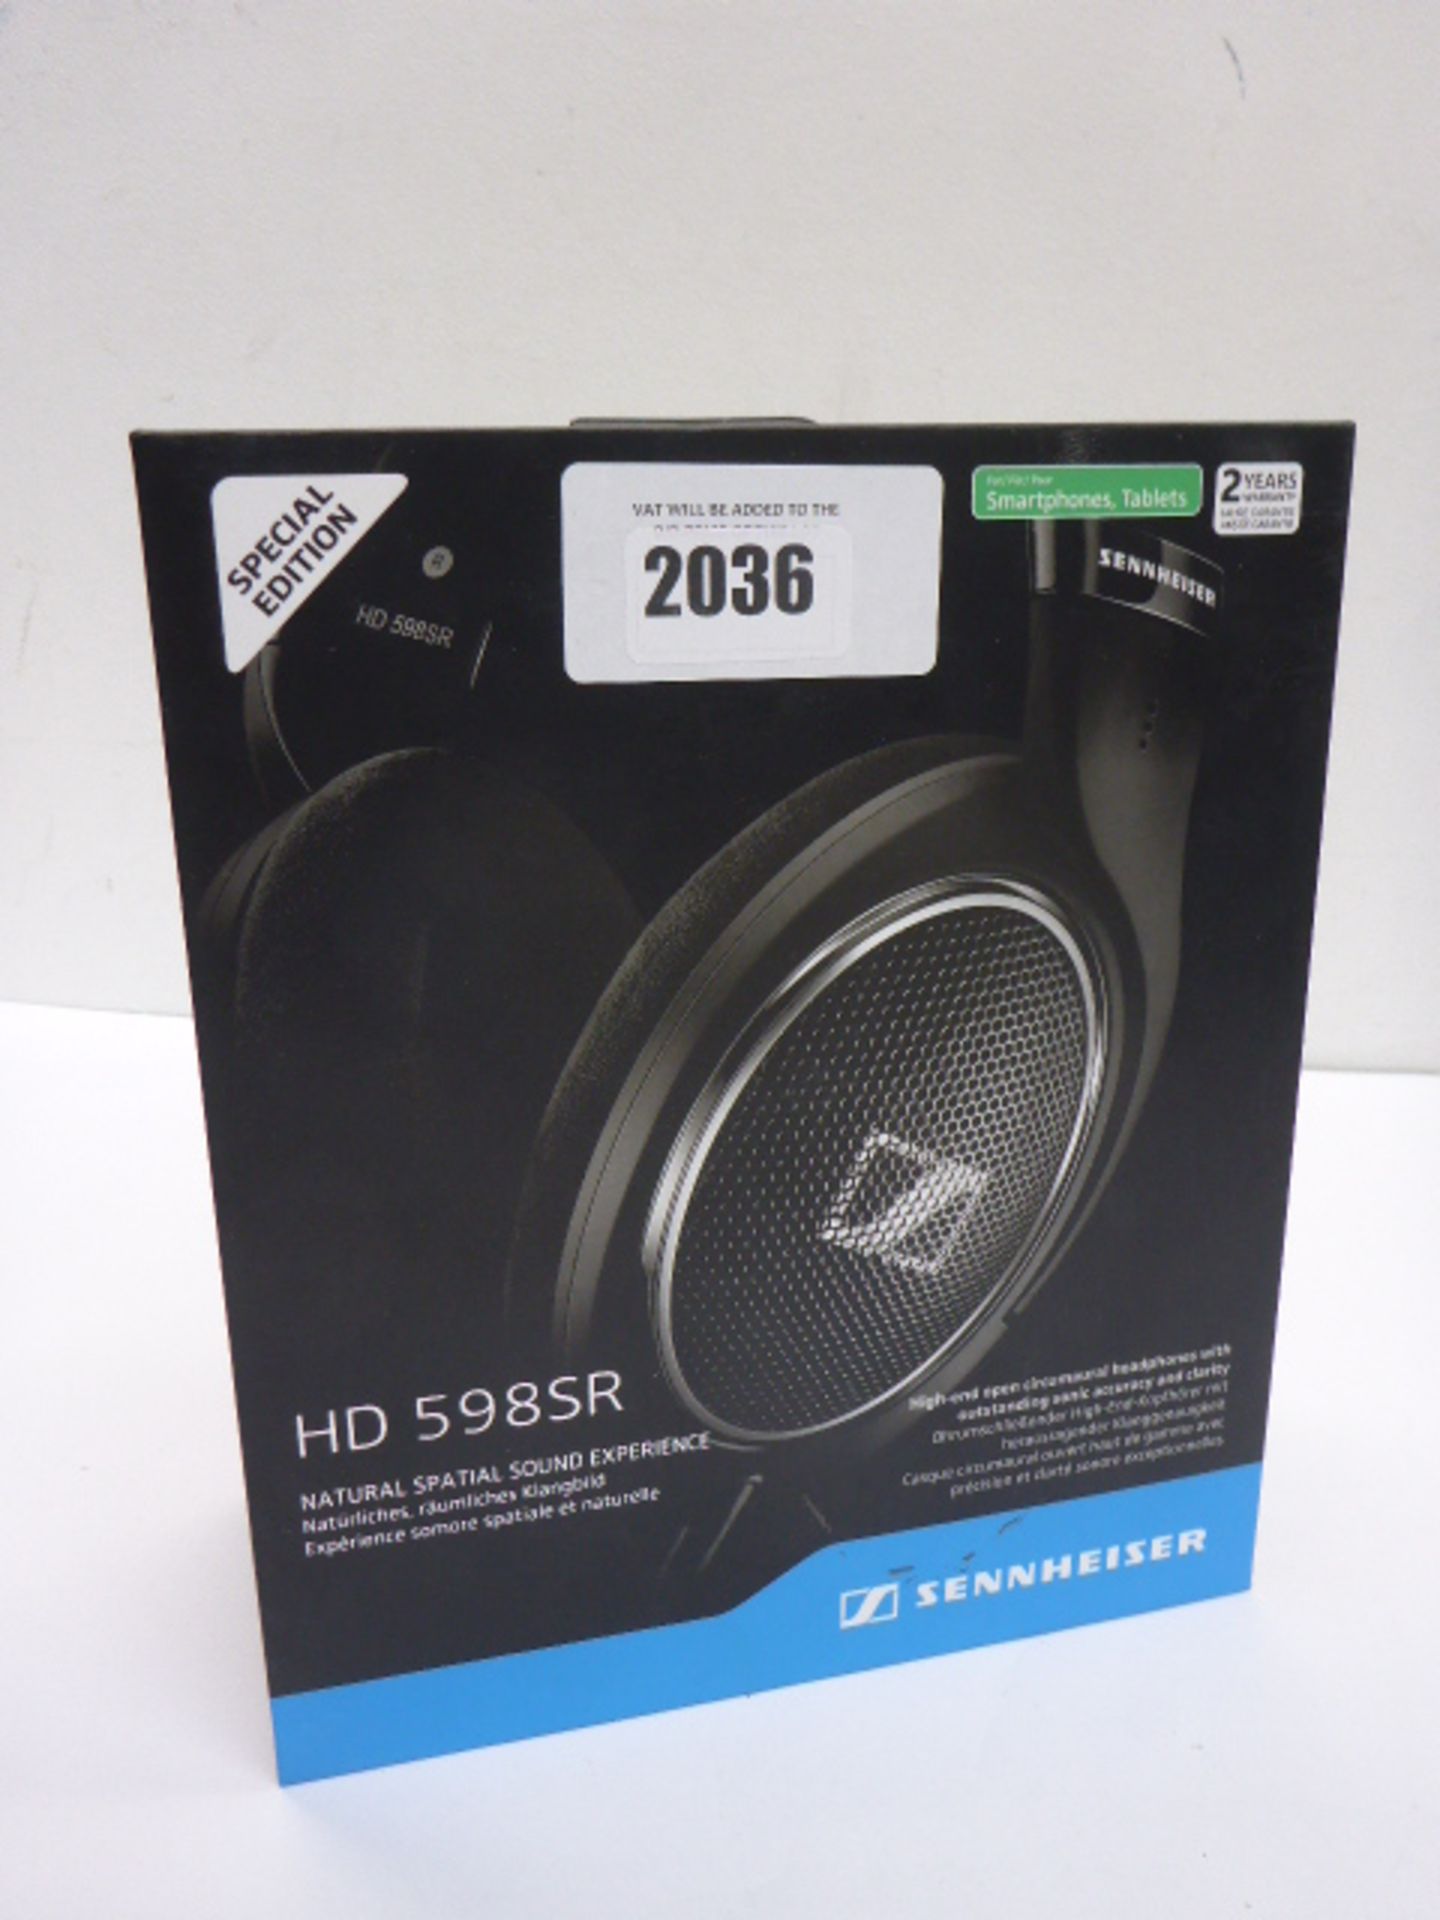 Sennheiser HD 598SR headphones